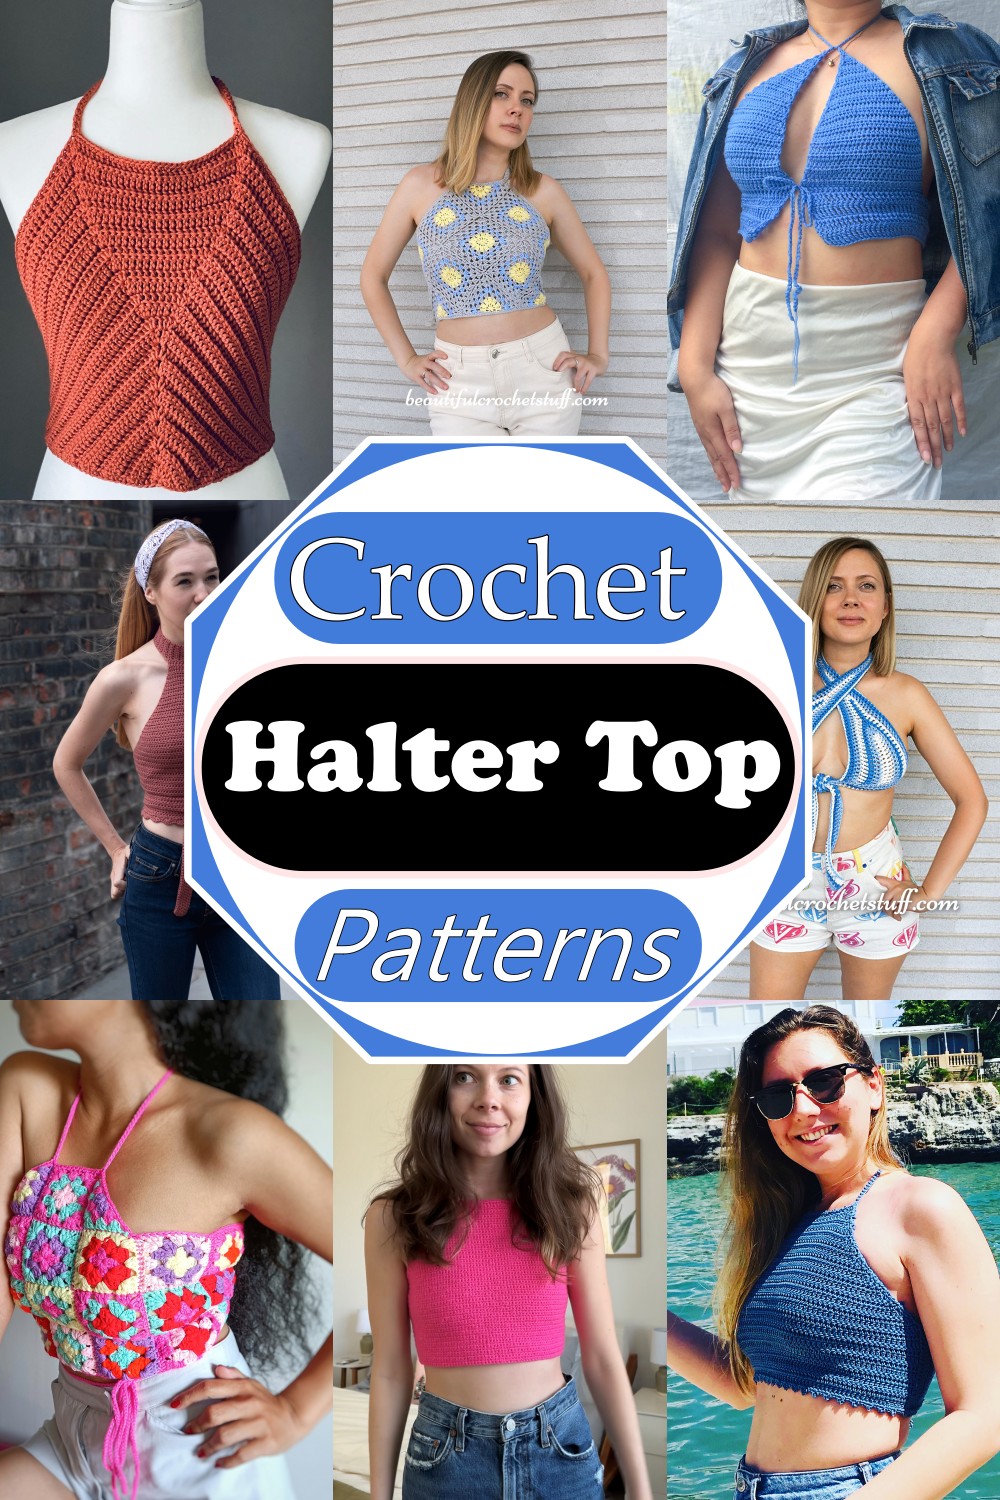 Free Crochet Halter Top Patterns